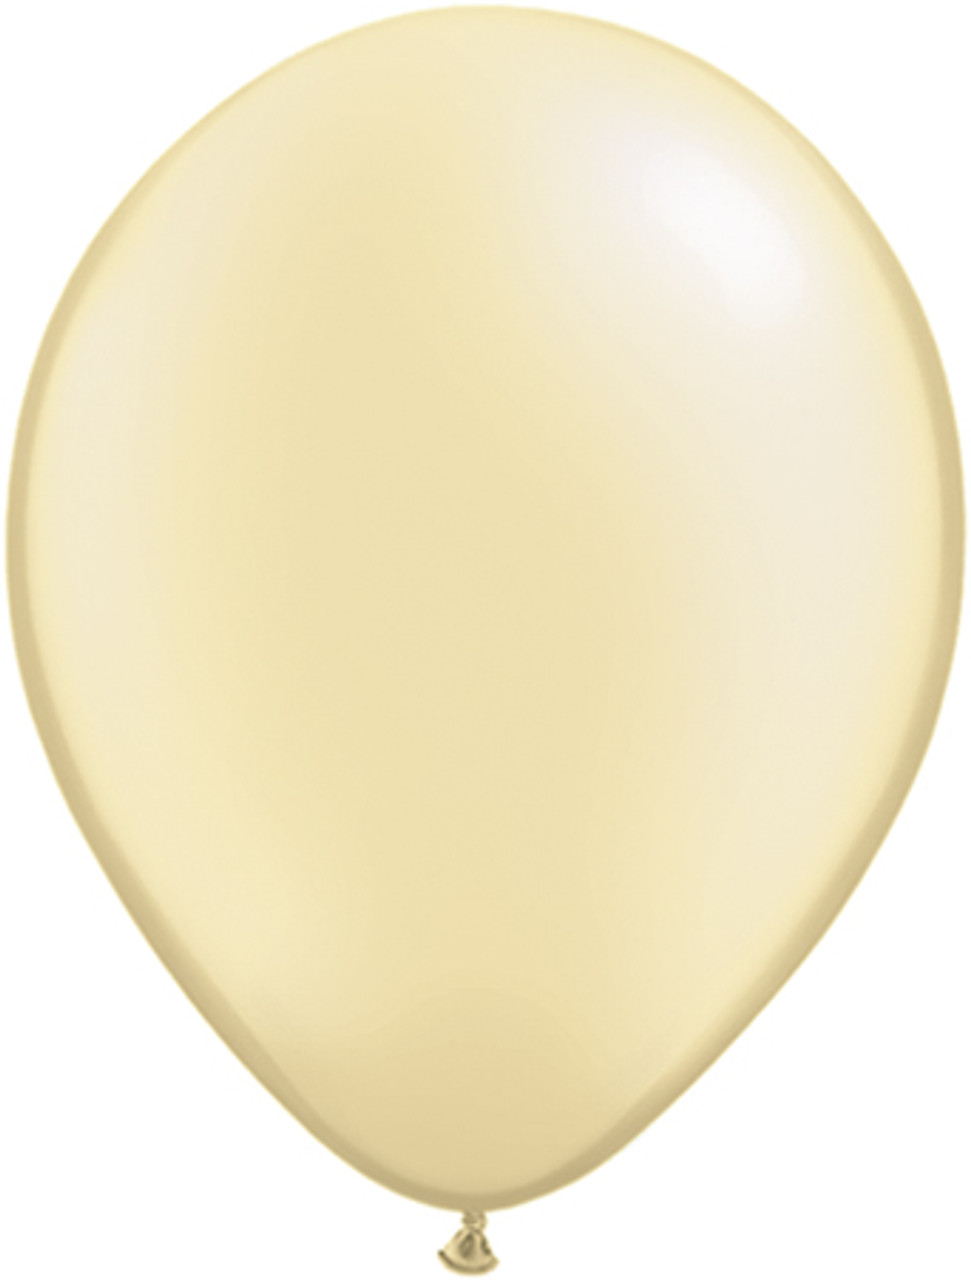 5 Qualatex Pearl Ivory Latex Balloons 100Bag #43584-5